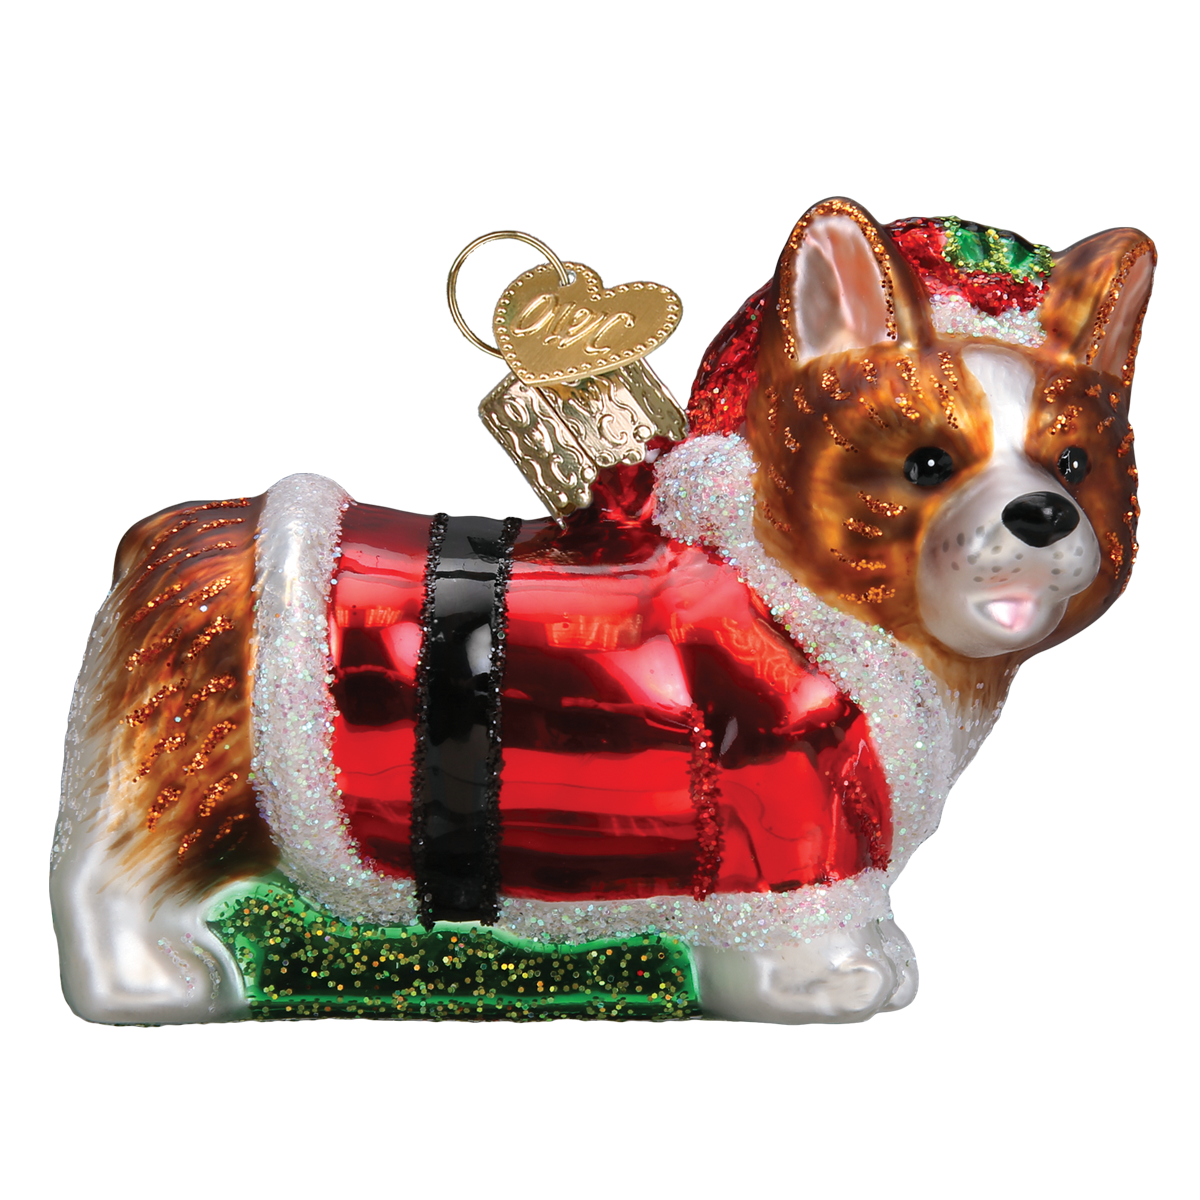 Holly Hat Corgi Puppy Ornament